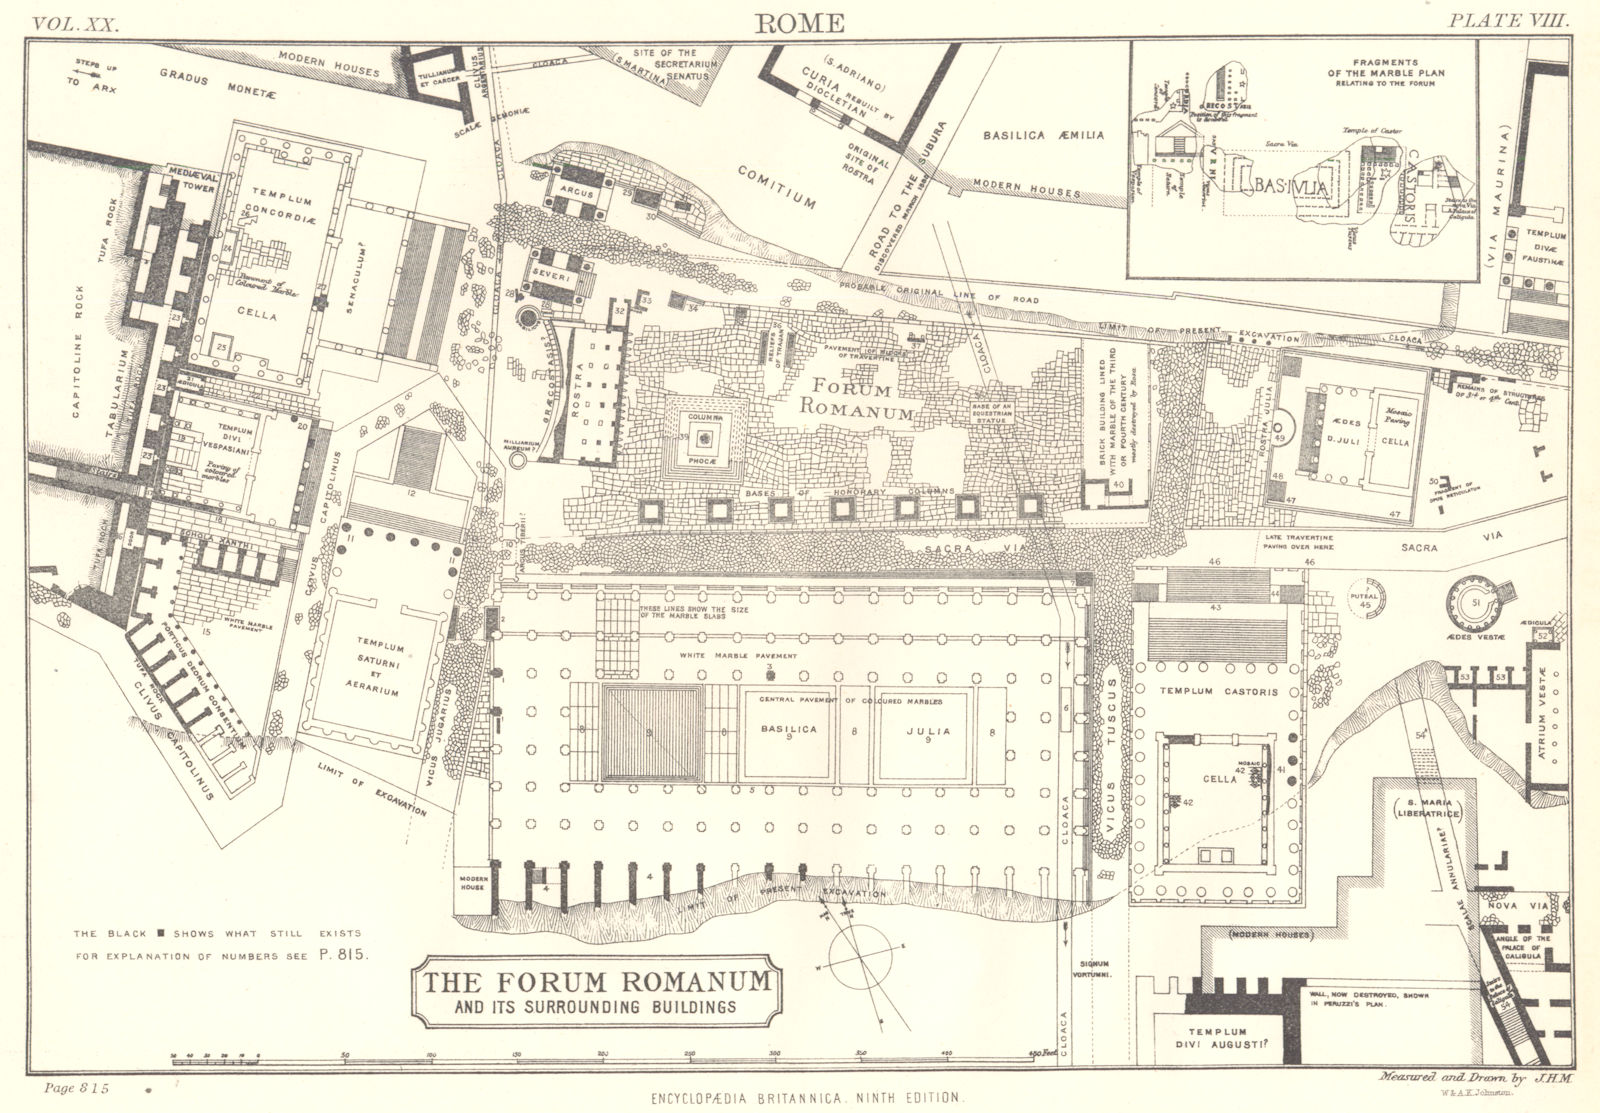 Associate Product ROME. Forum Romanum & surrounding buildings. Britannica 9th edition 1898 map